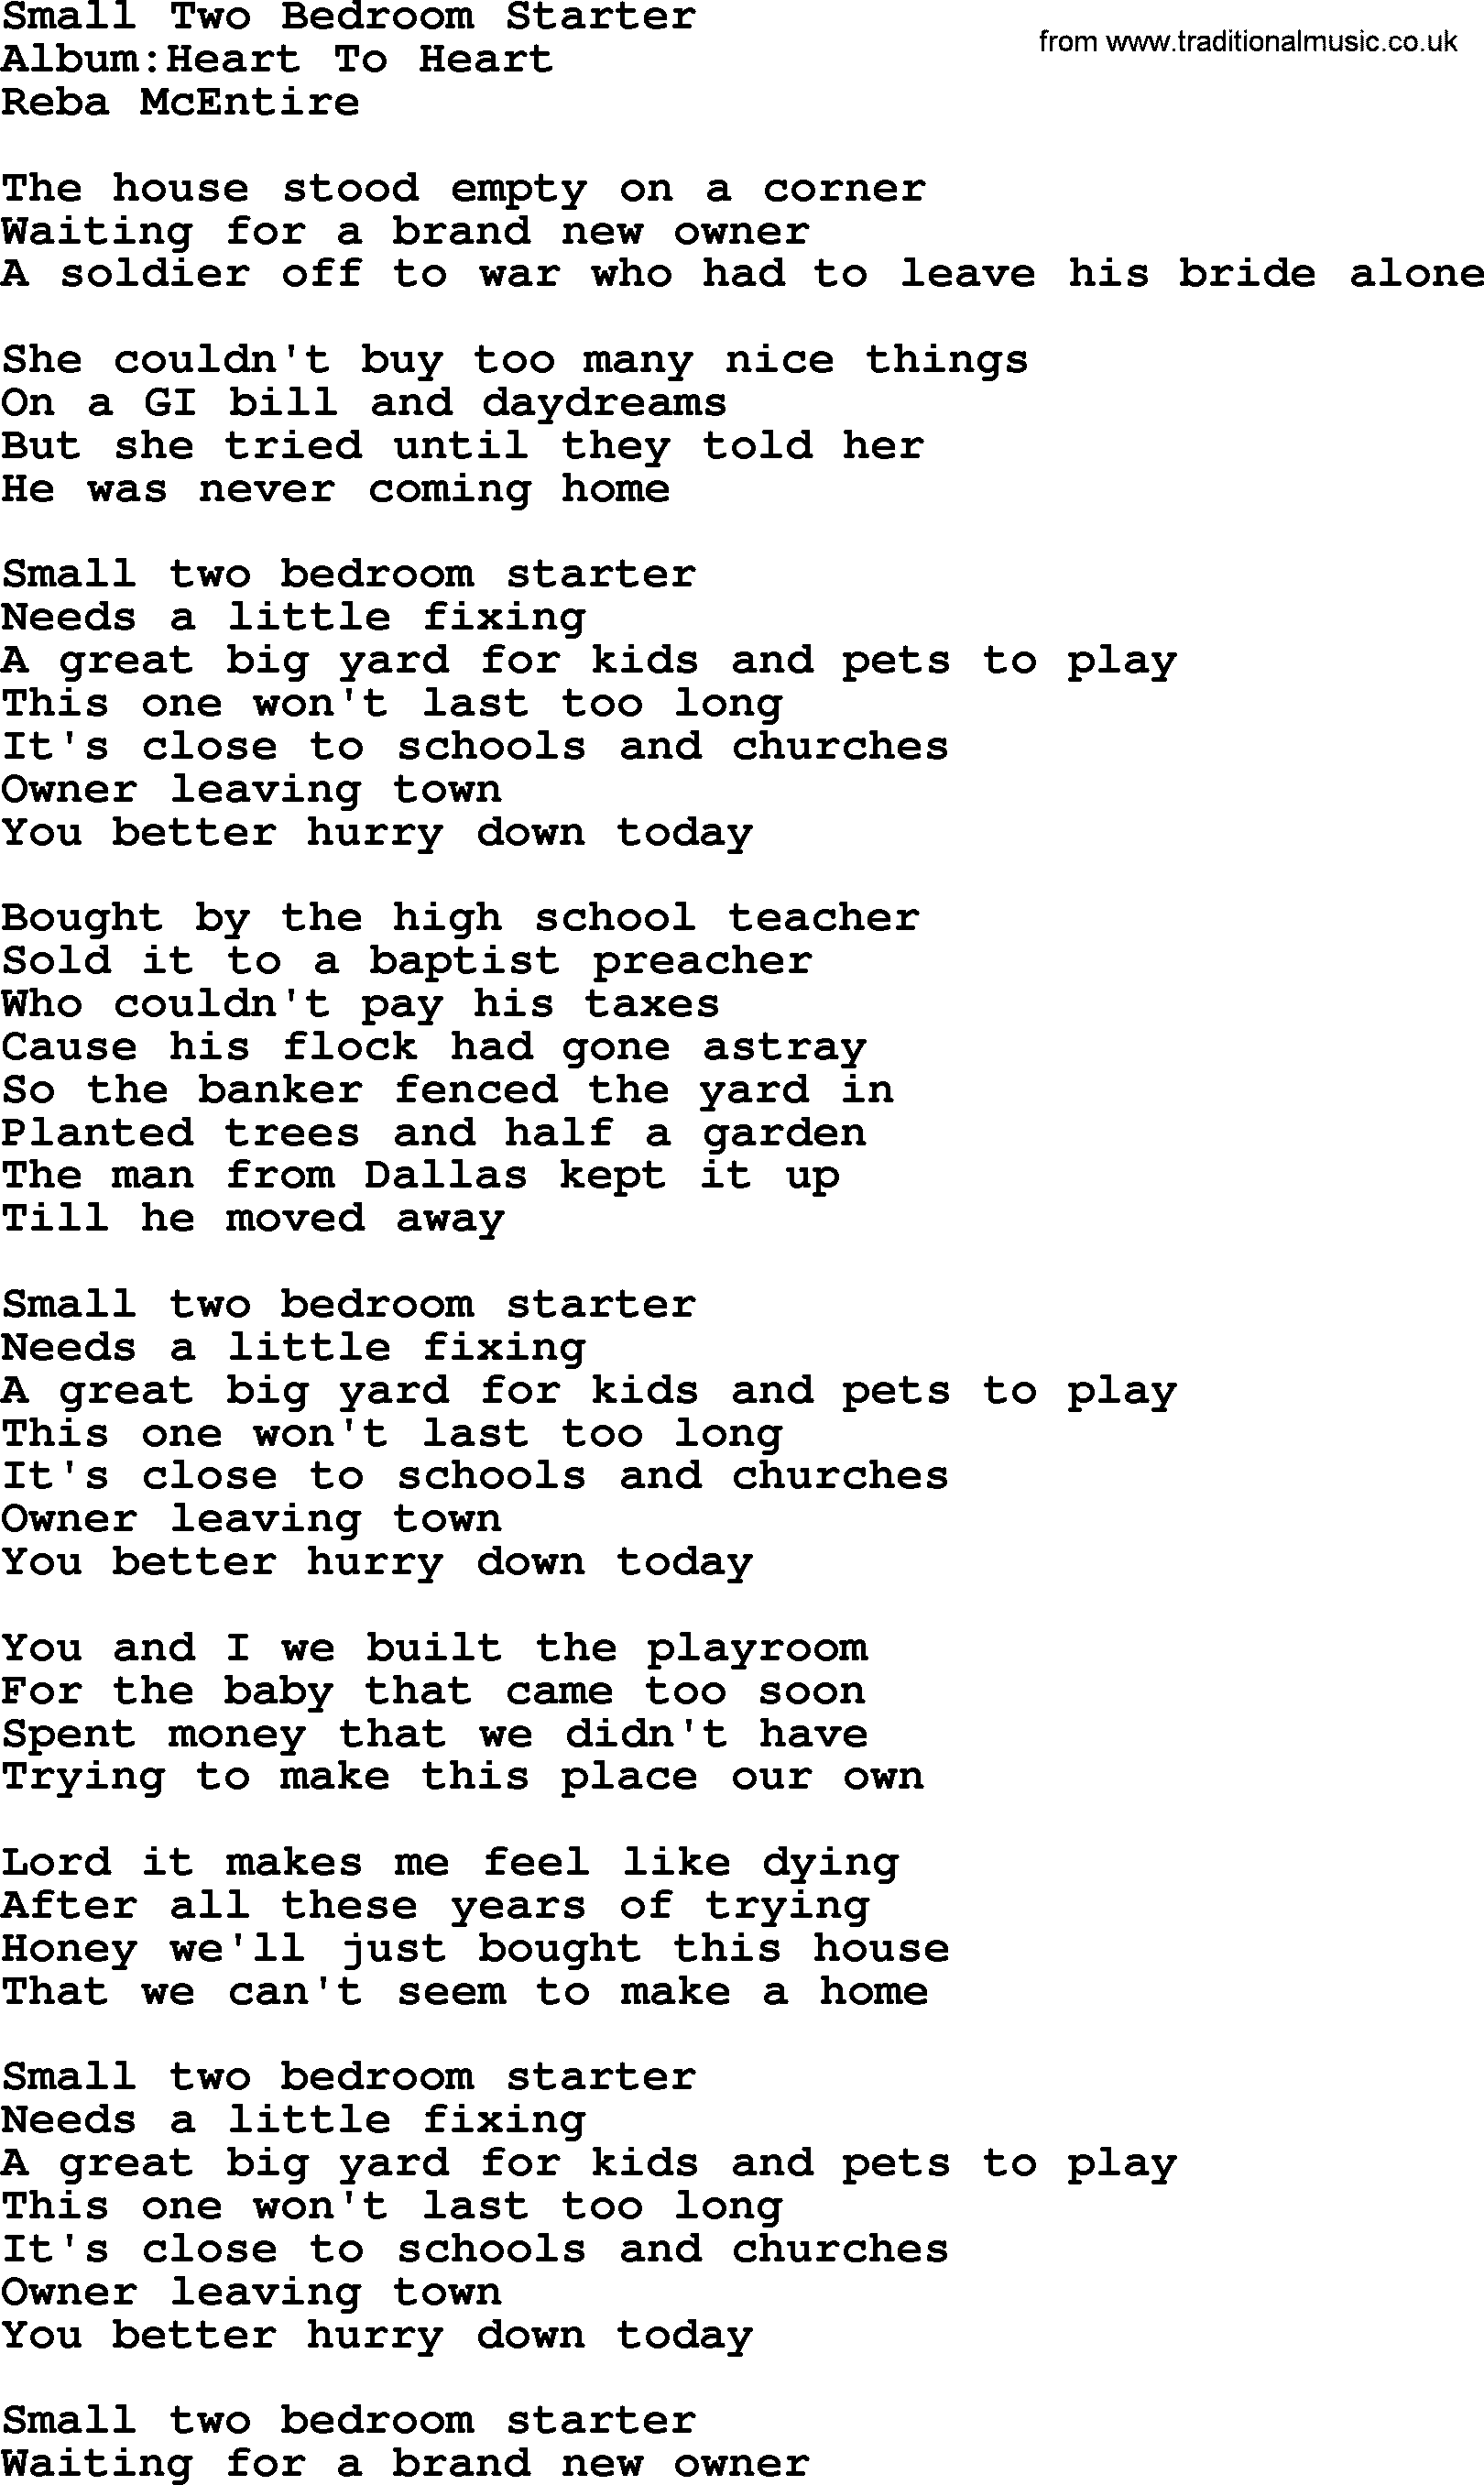 Reba McEntire song: Small Two Bedroom Starter lyrics